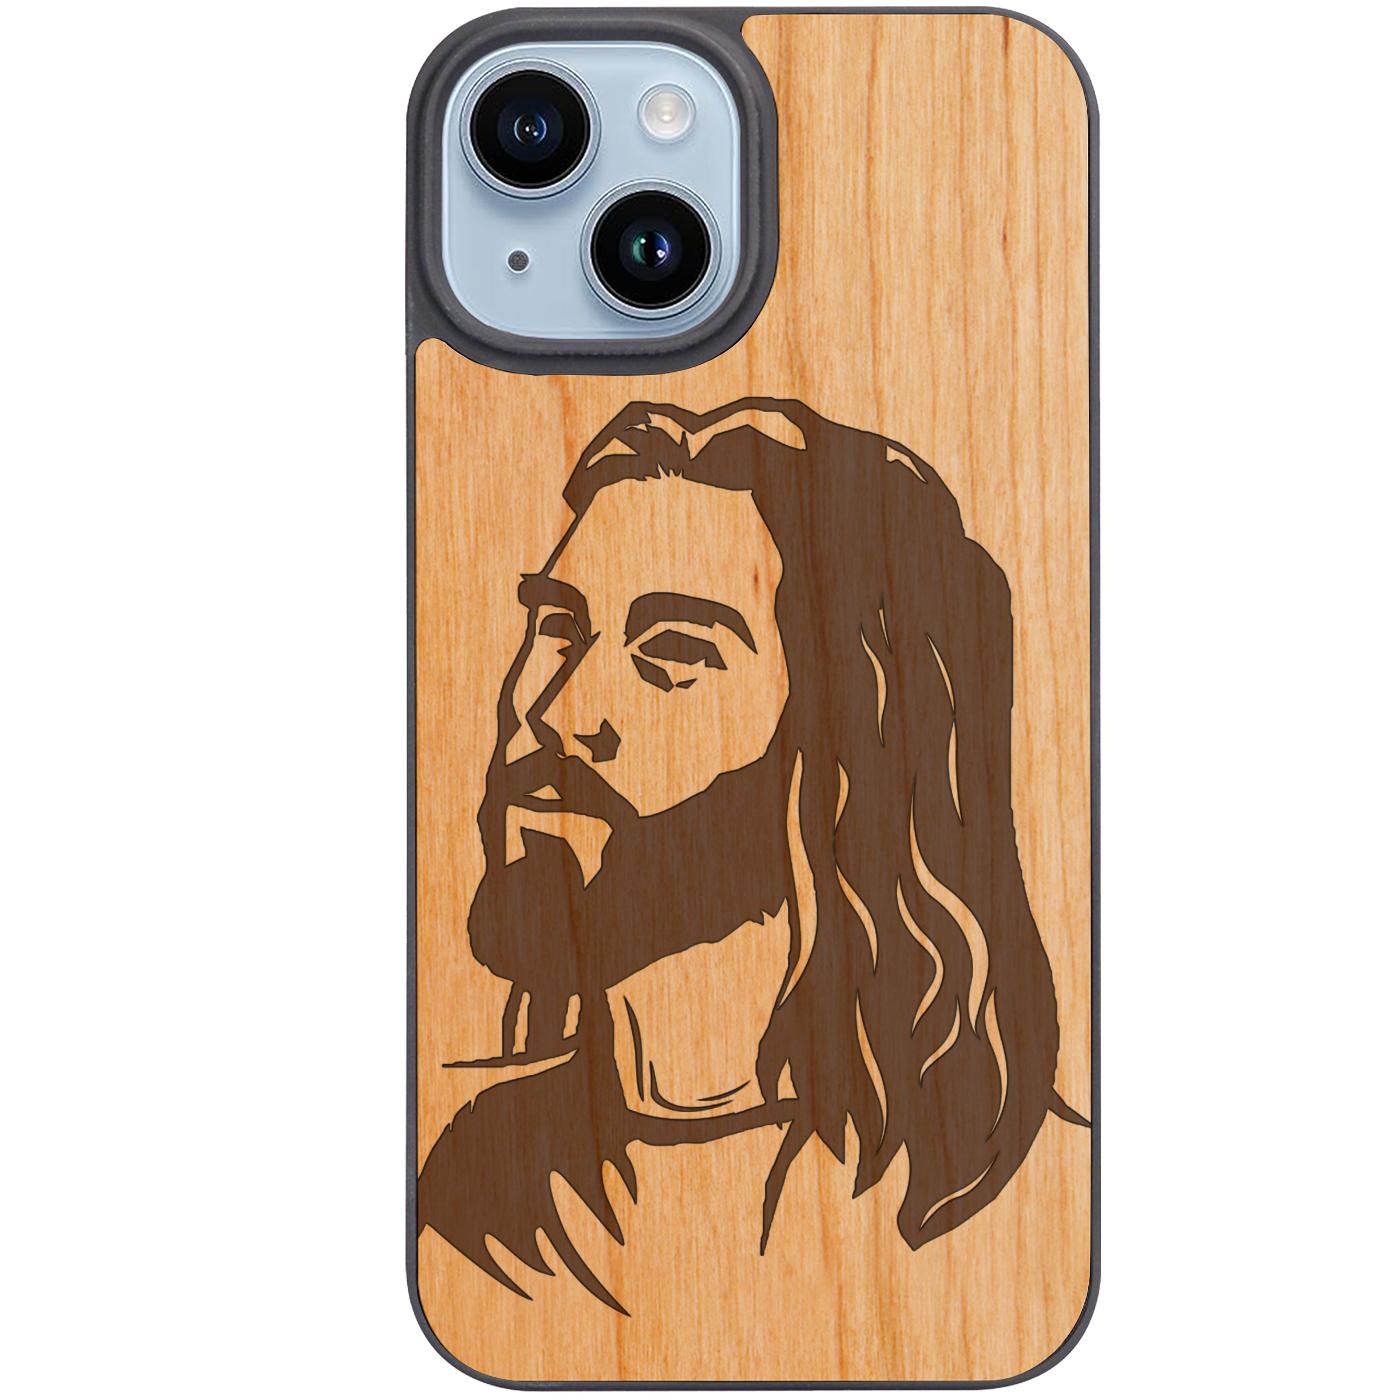 Jesus the Savior - Engraved Phone Case